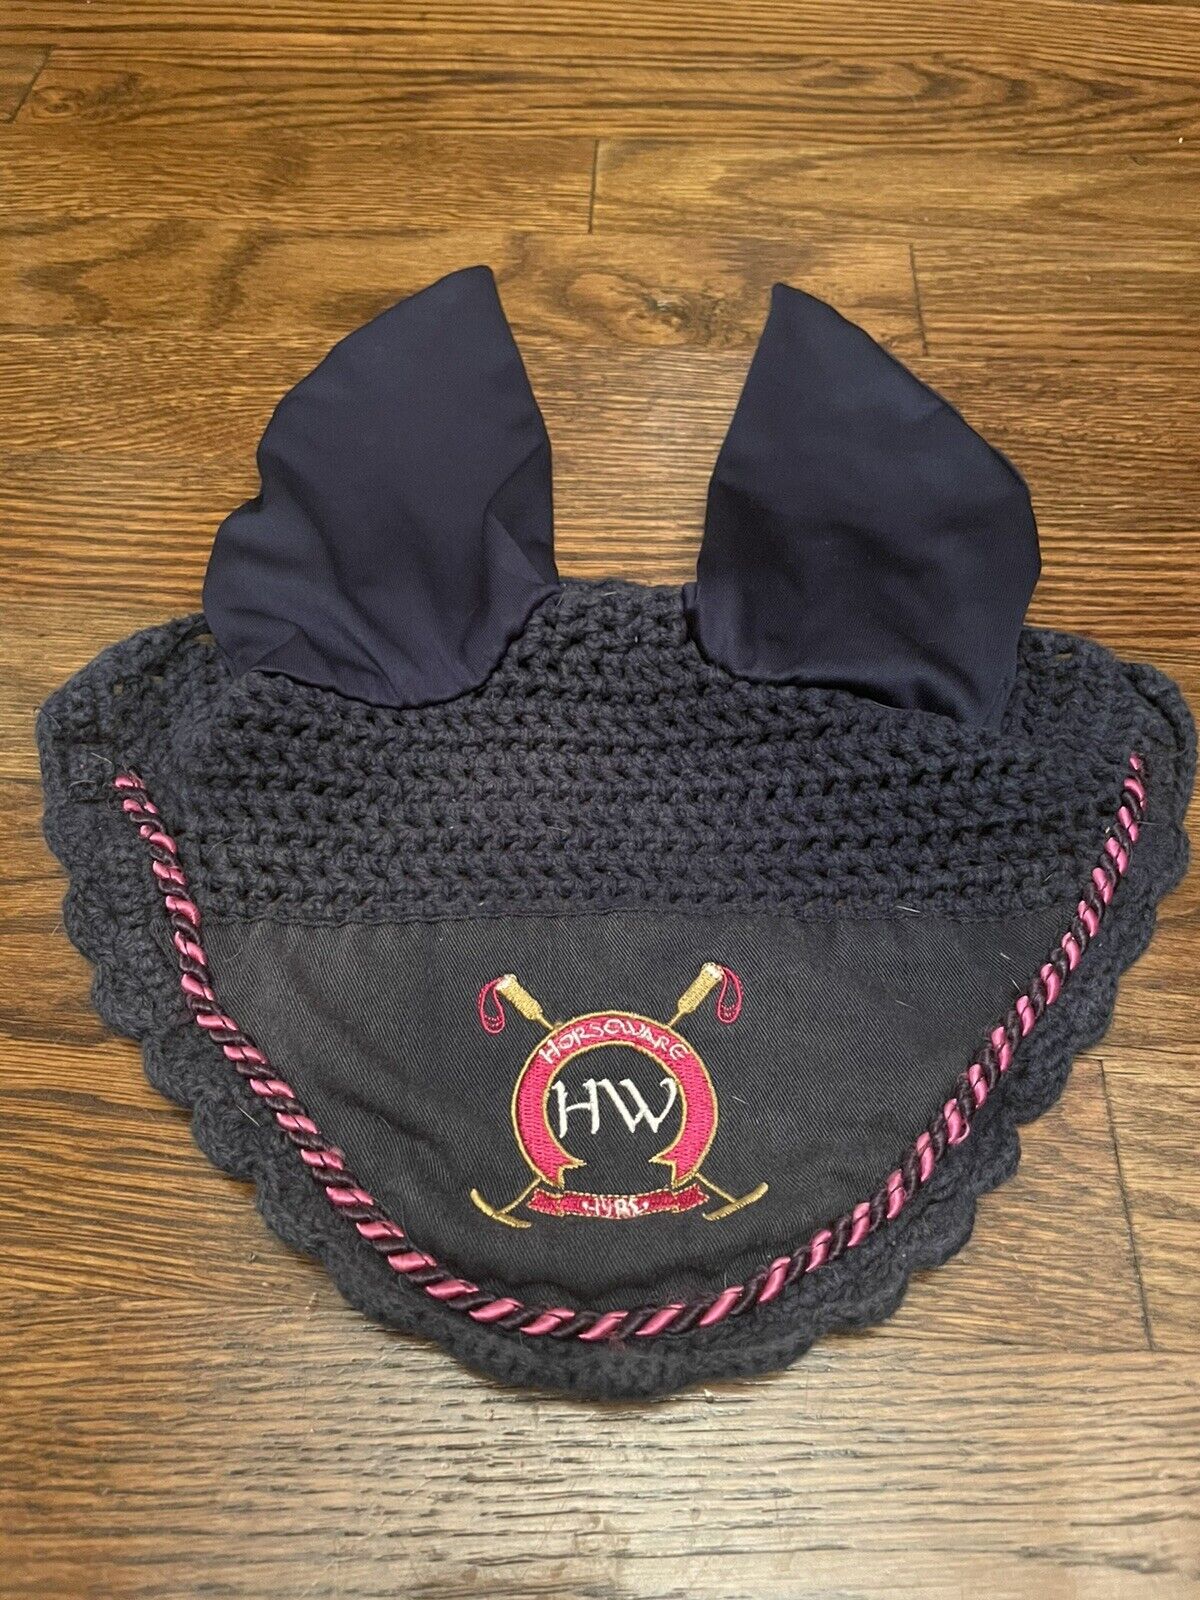 Horsewear Ear Net/Fly Veil/Bonnet, Navy Blue With Pink Trim, Pon